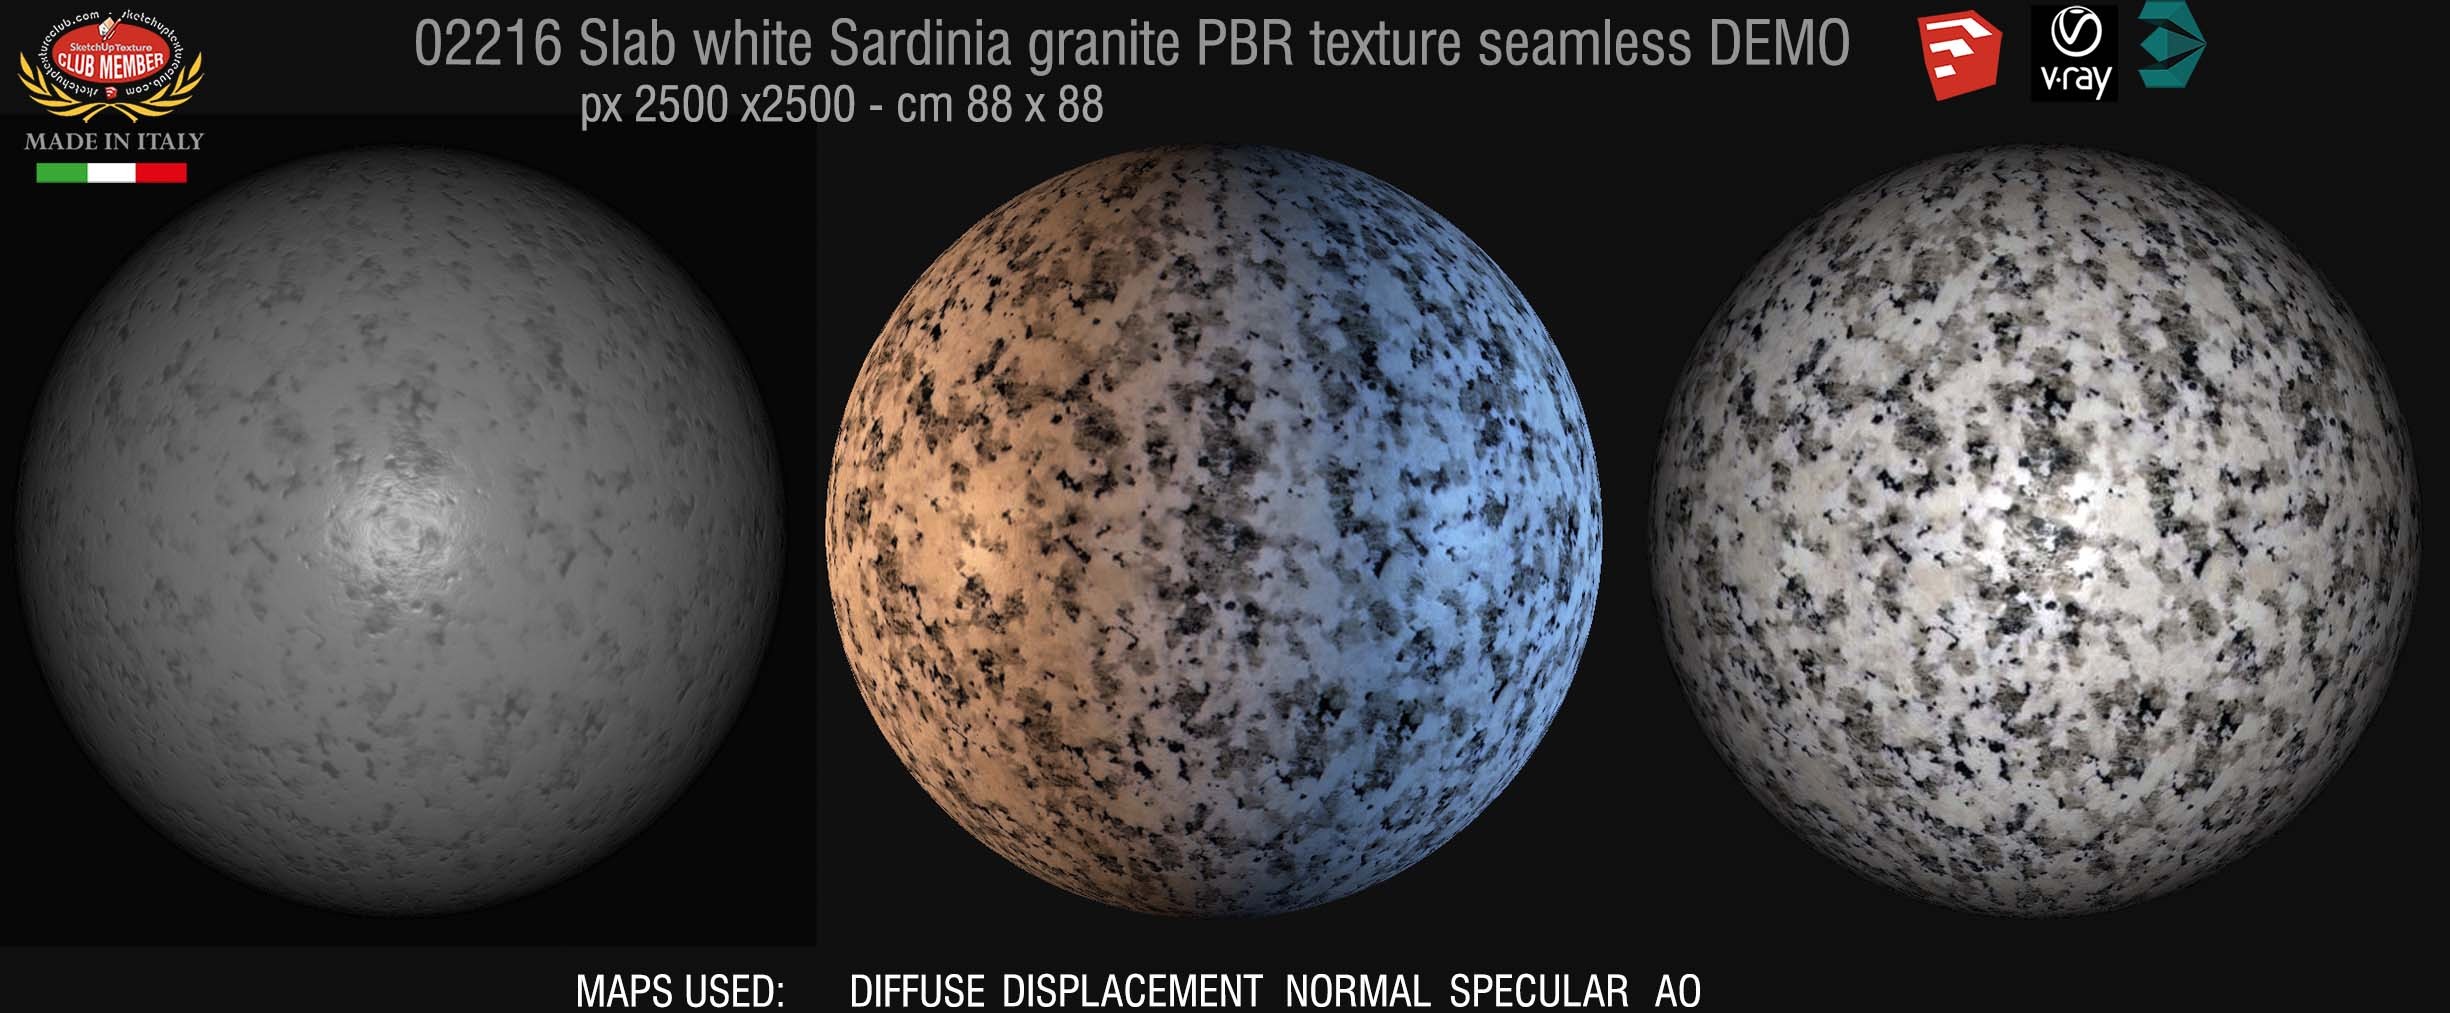 02216 Slab white Sardinia granite PBR texture seamless DEMO